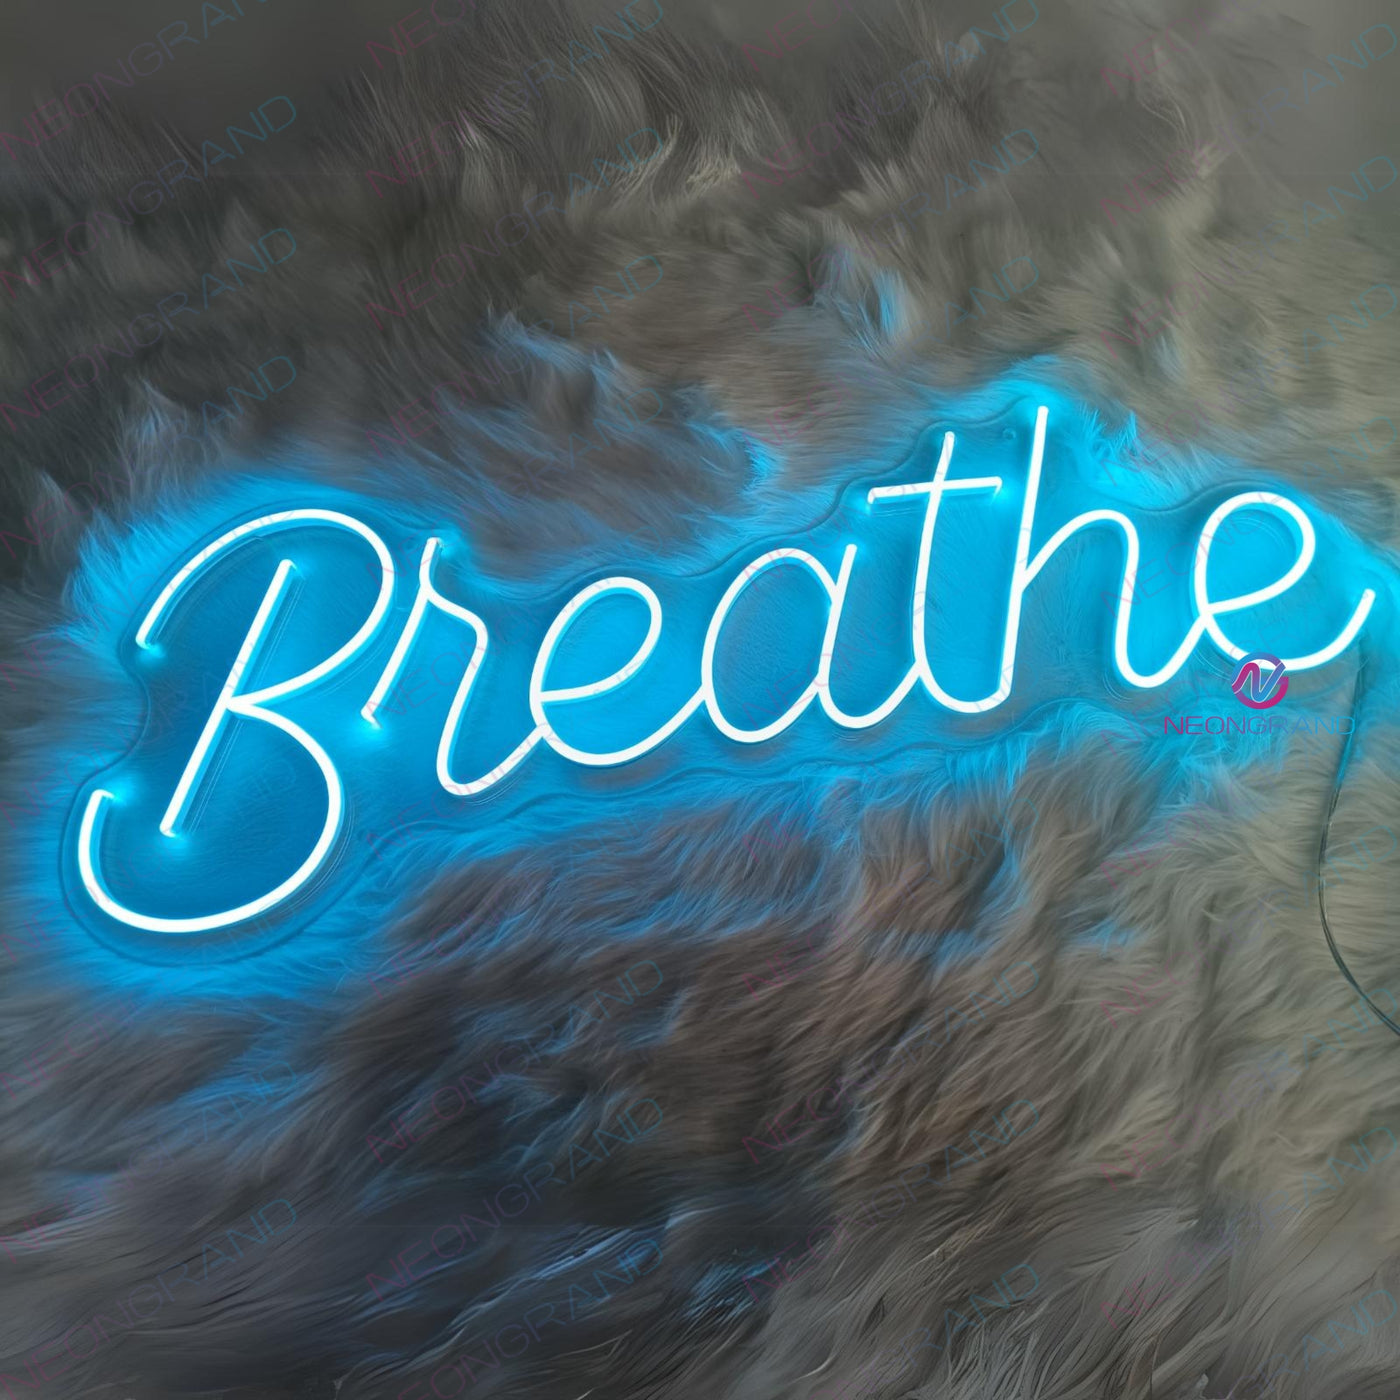 Breathe Neon Sign Yoga Gym Led Light